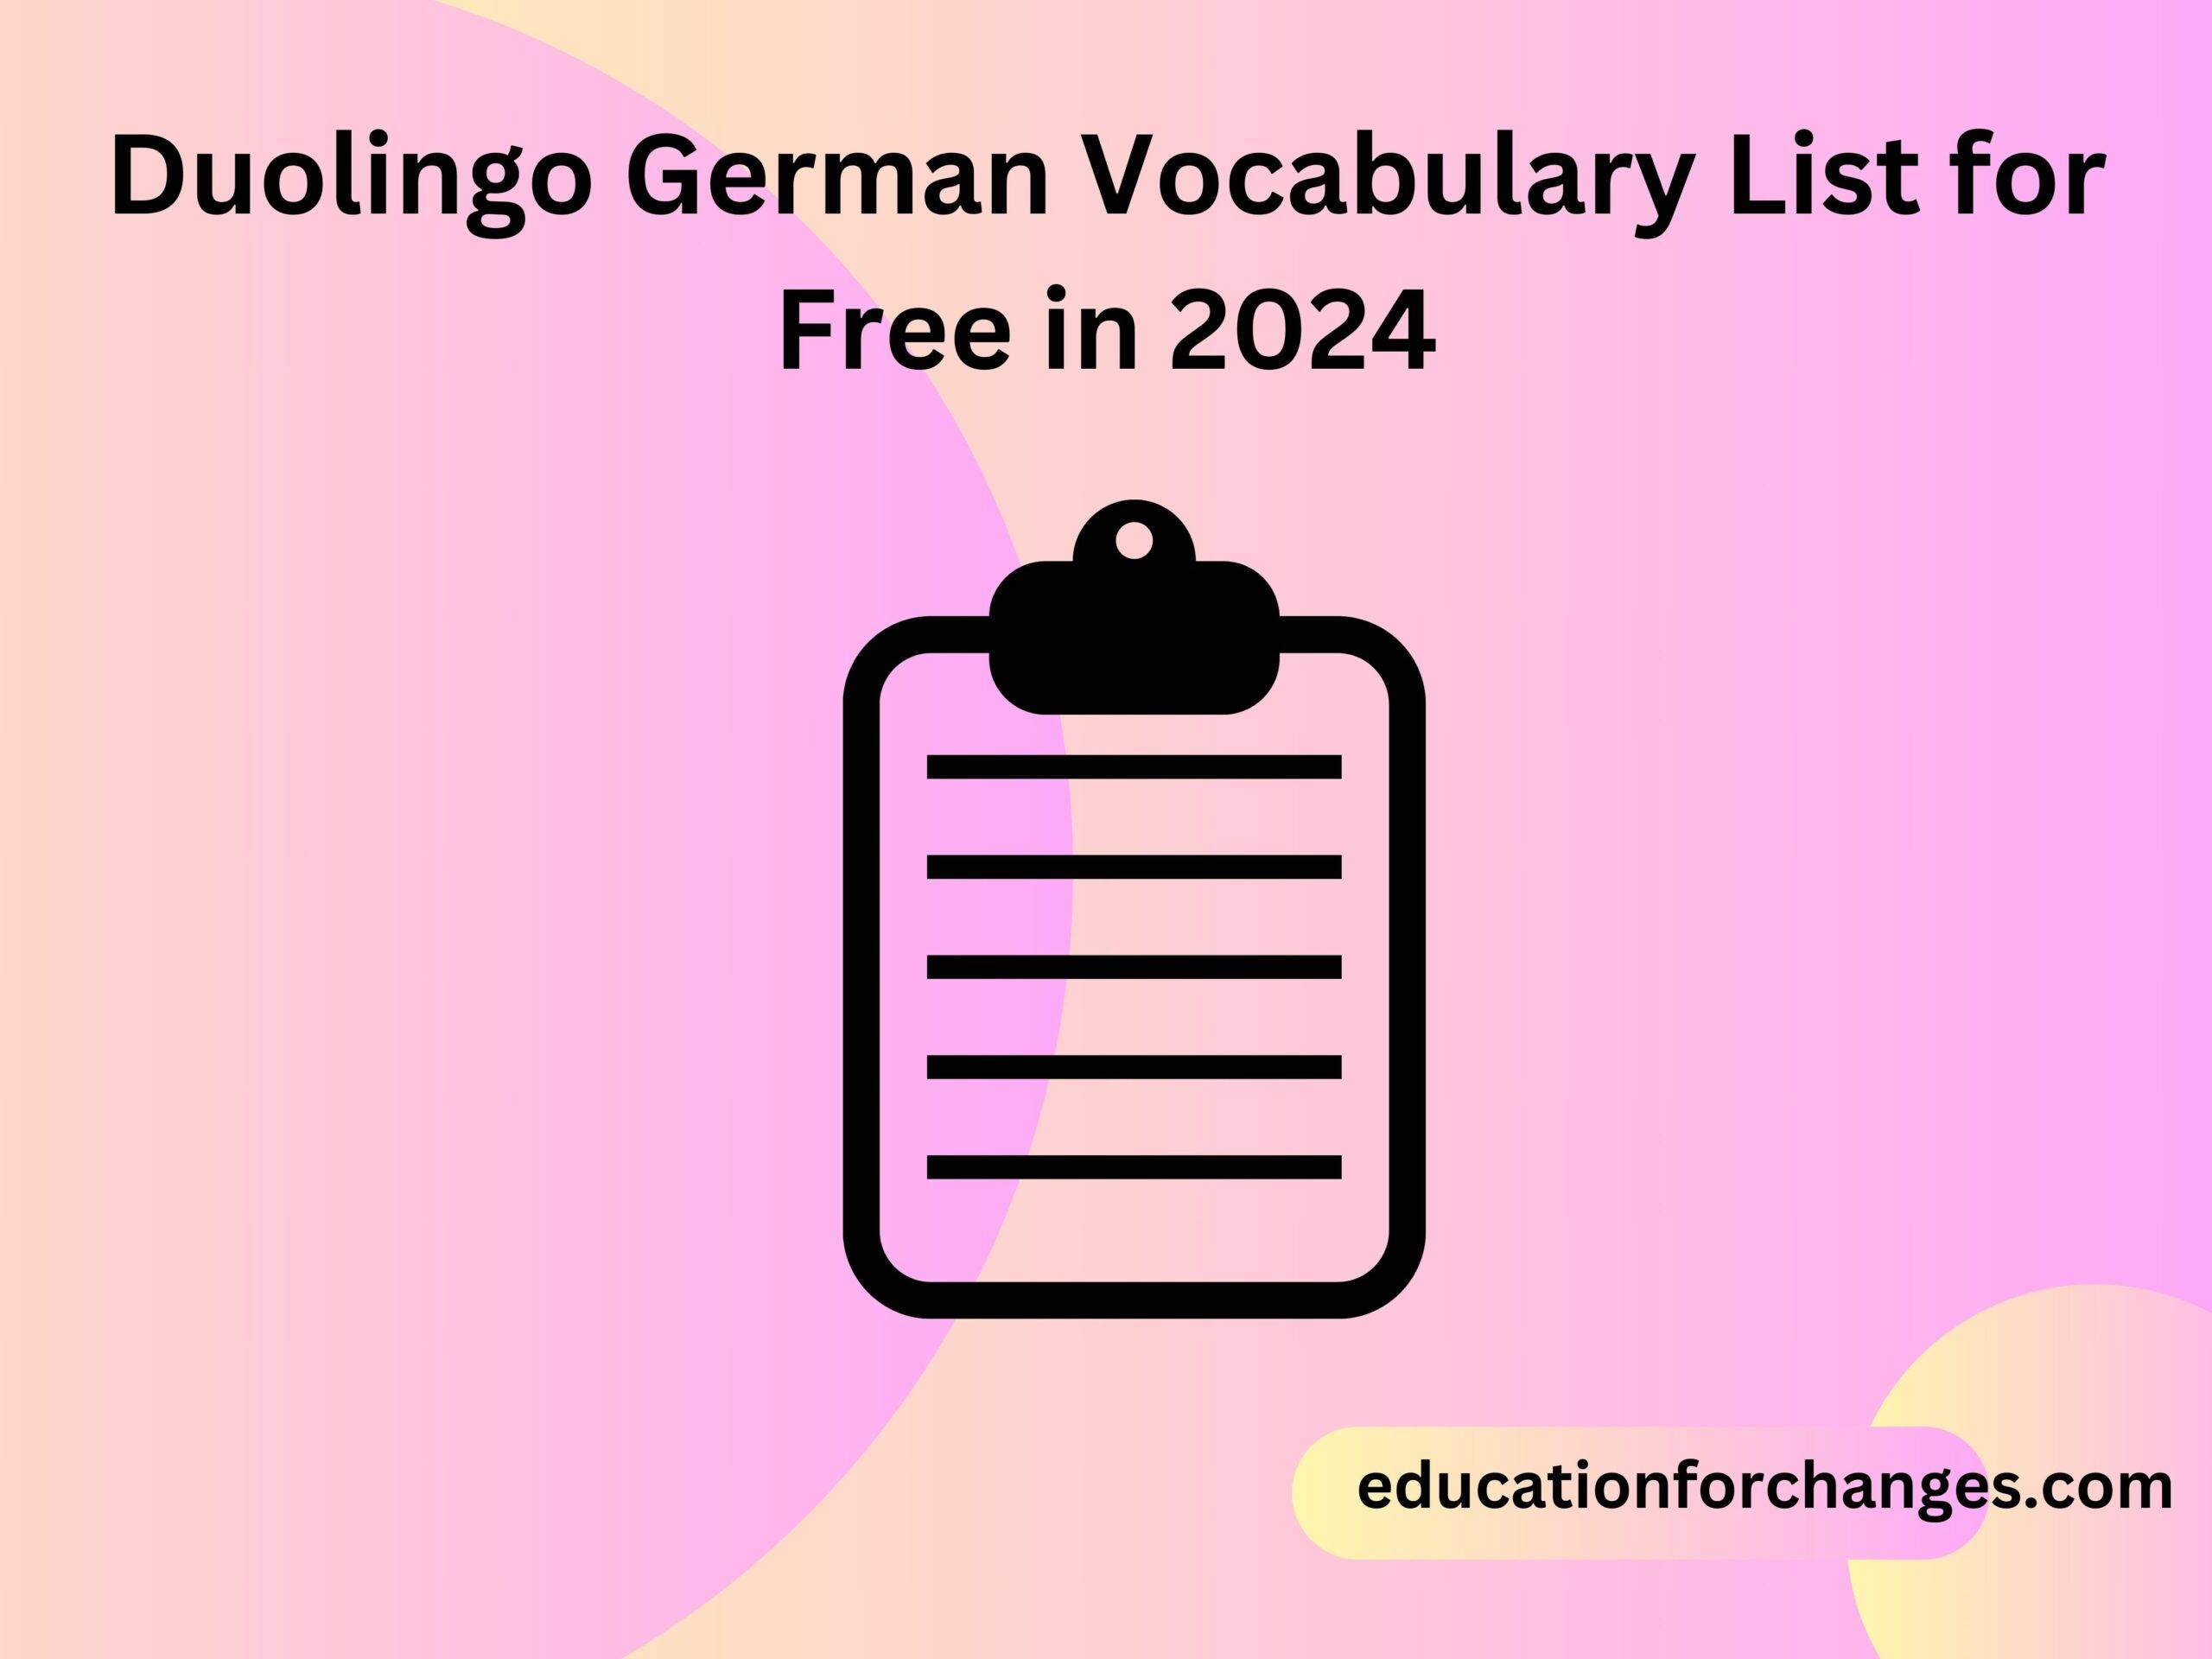 Duolingo German Vocabulary List for Free in 2024